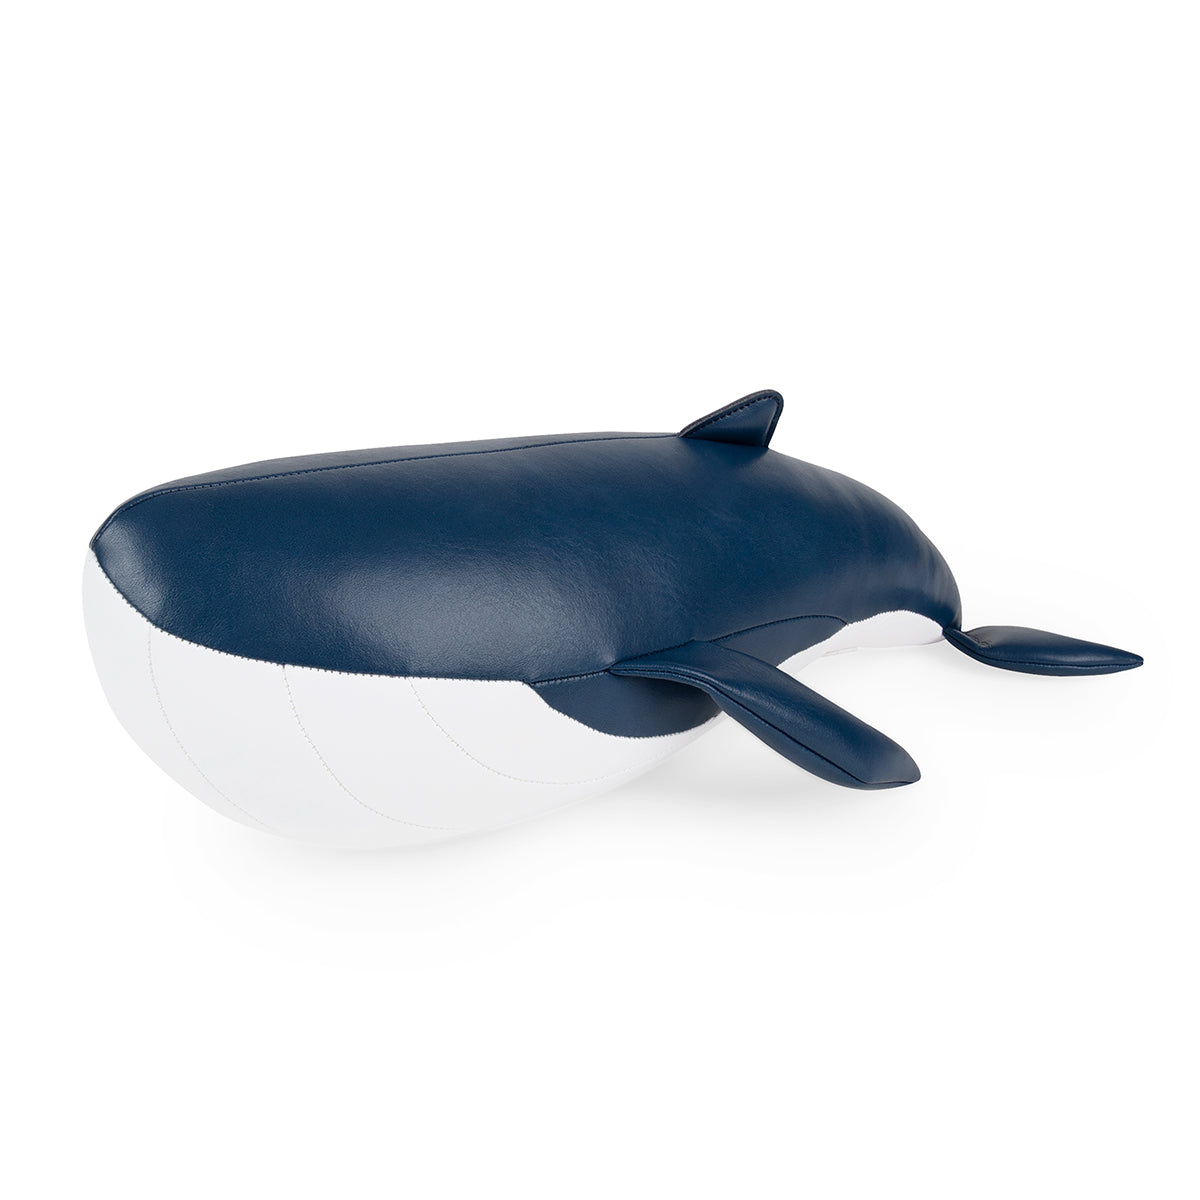 Zuny Doorstop Whale Wave Midnight Blue